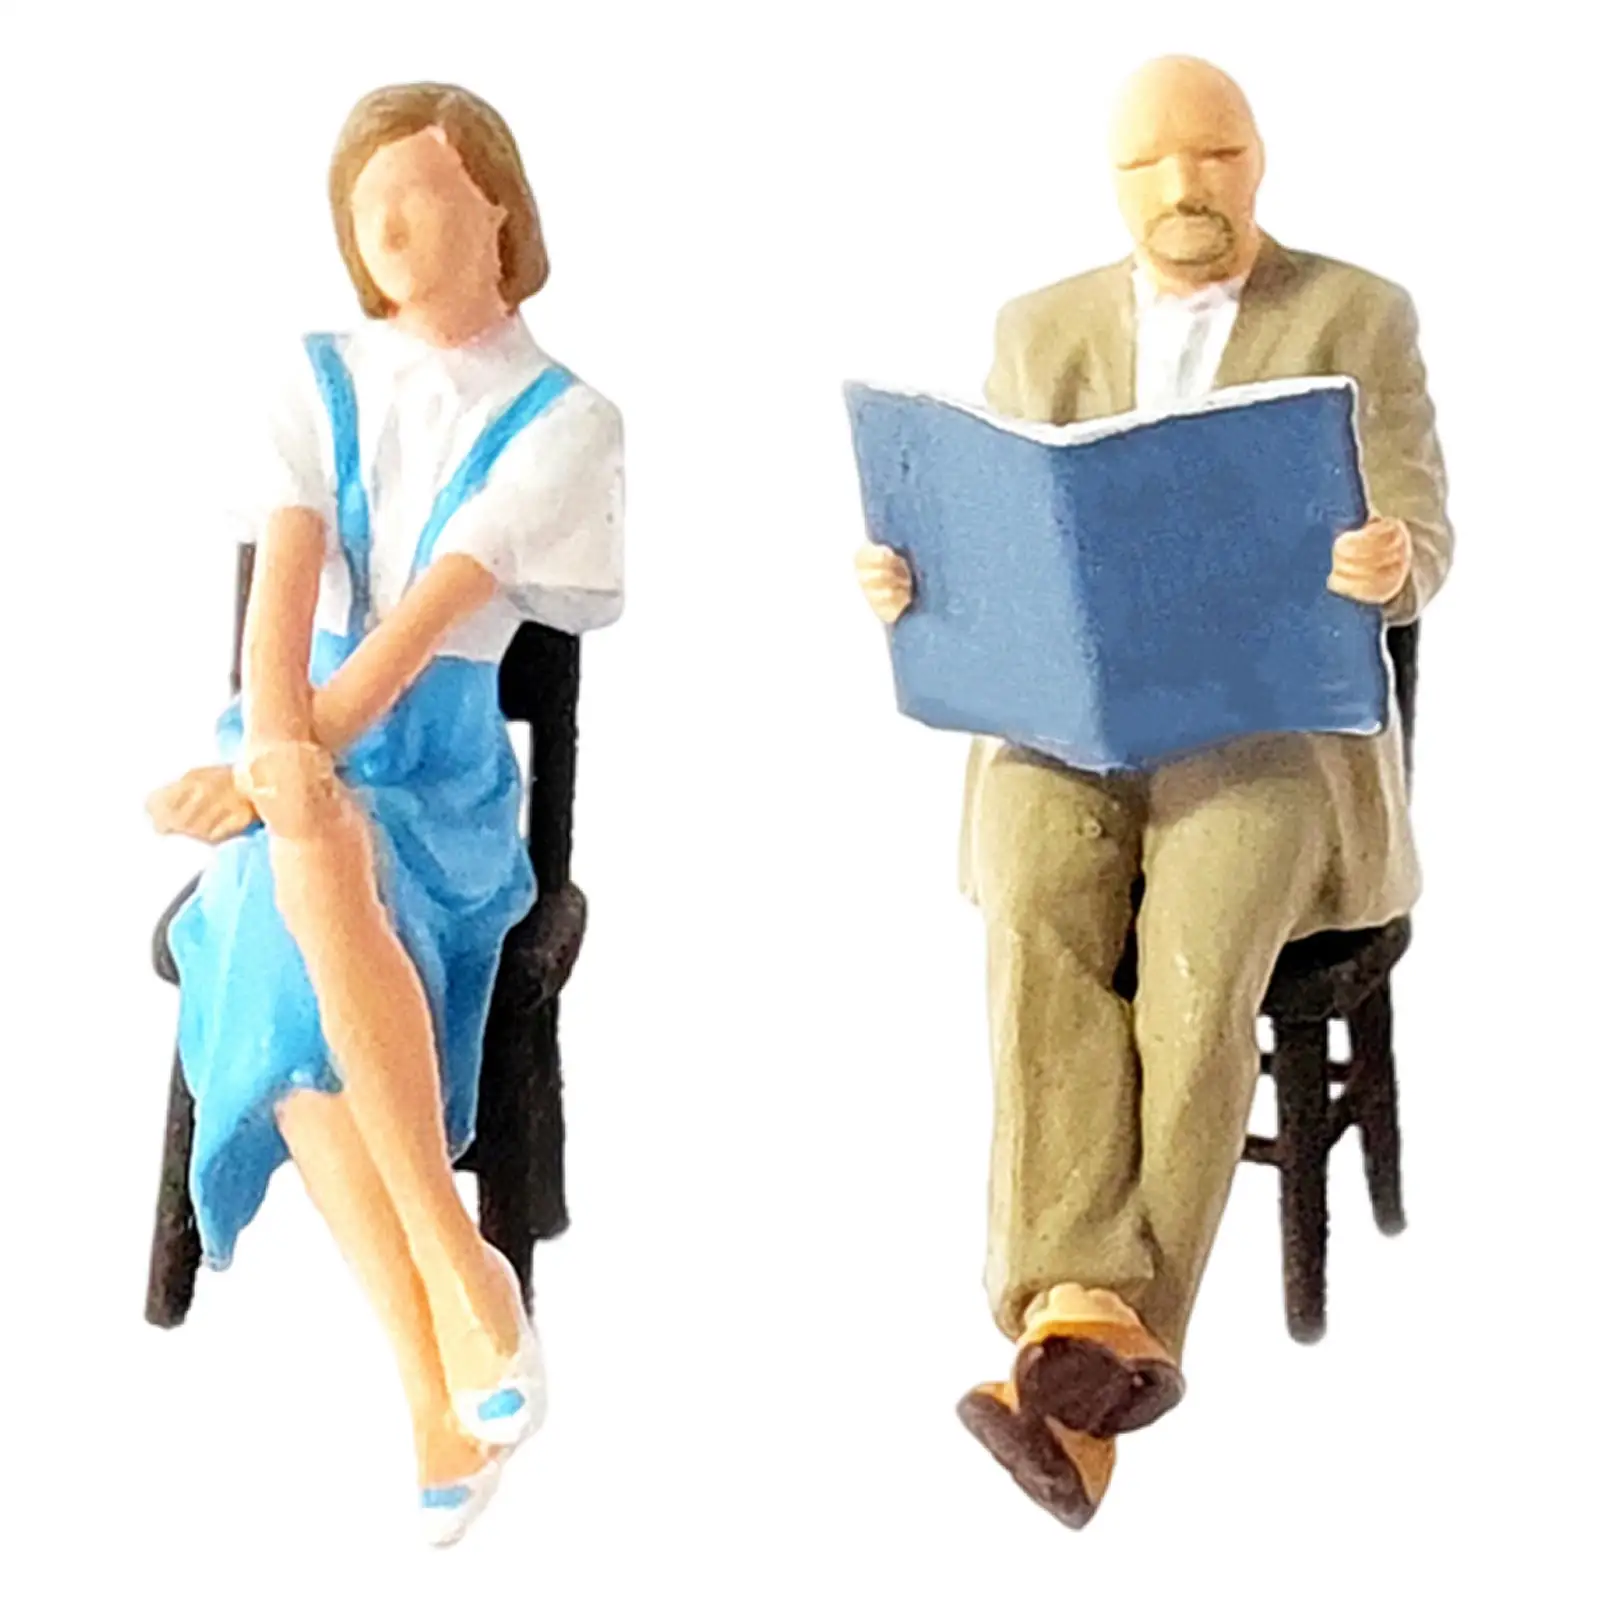 Resin 1/64 Figures Reader Desktop Ornament DIY Model Building Kits Collectibles Miniatures Doll Figurines